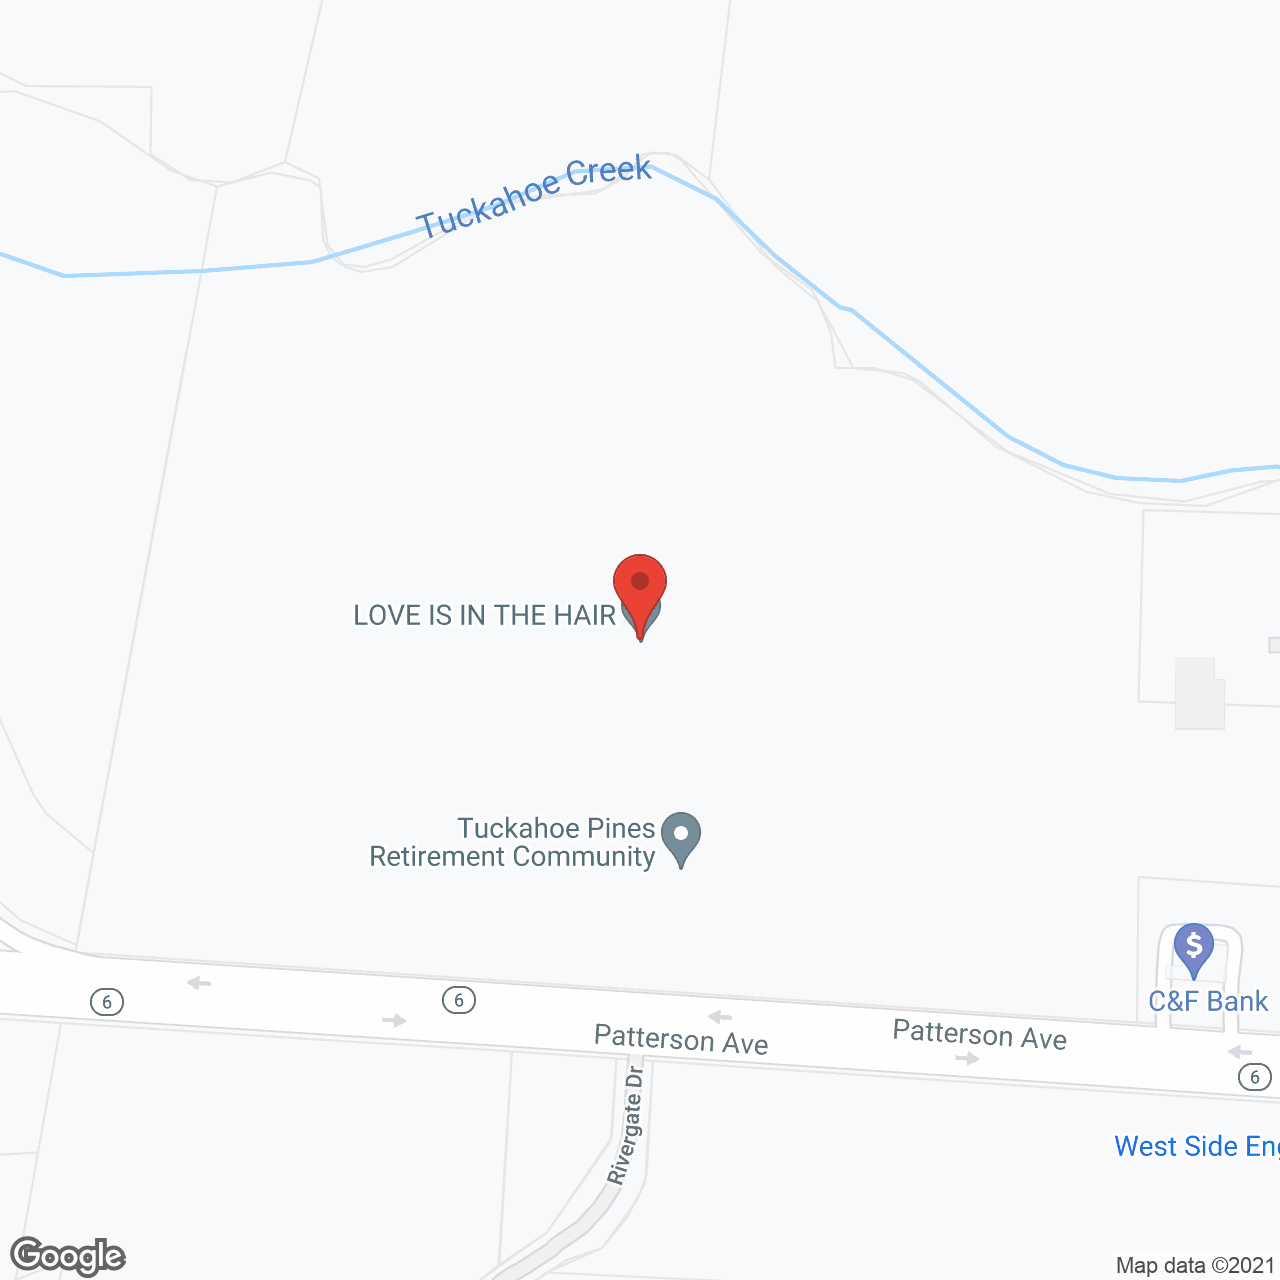 Tuckahoe Pines Retirement Community in google map